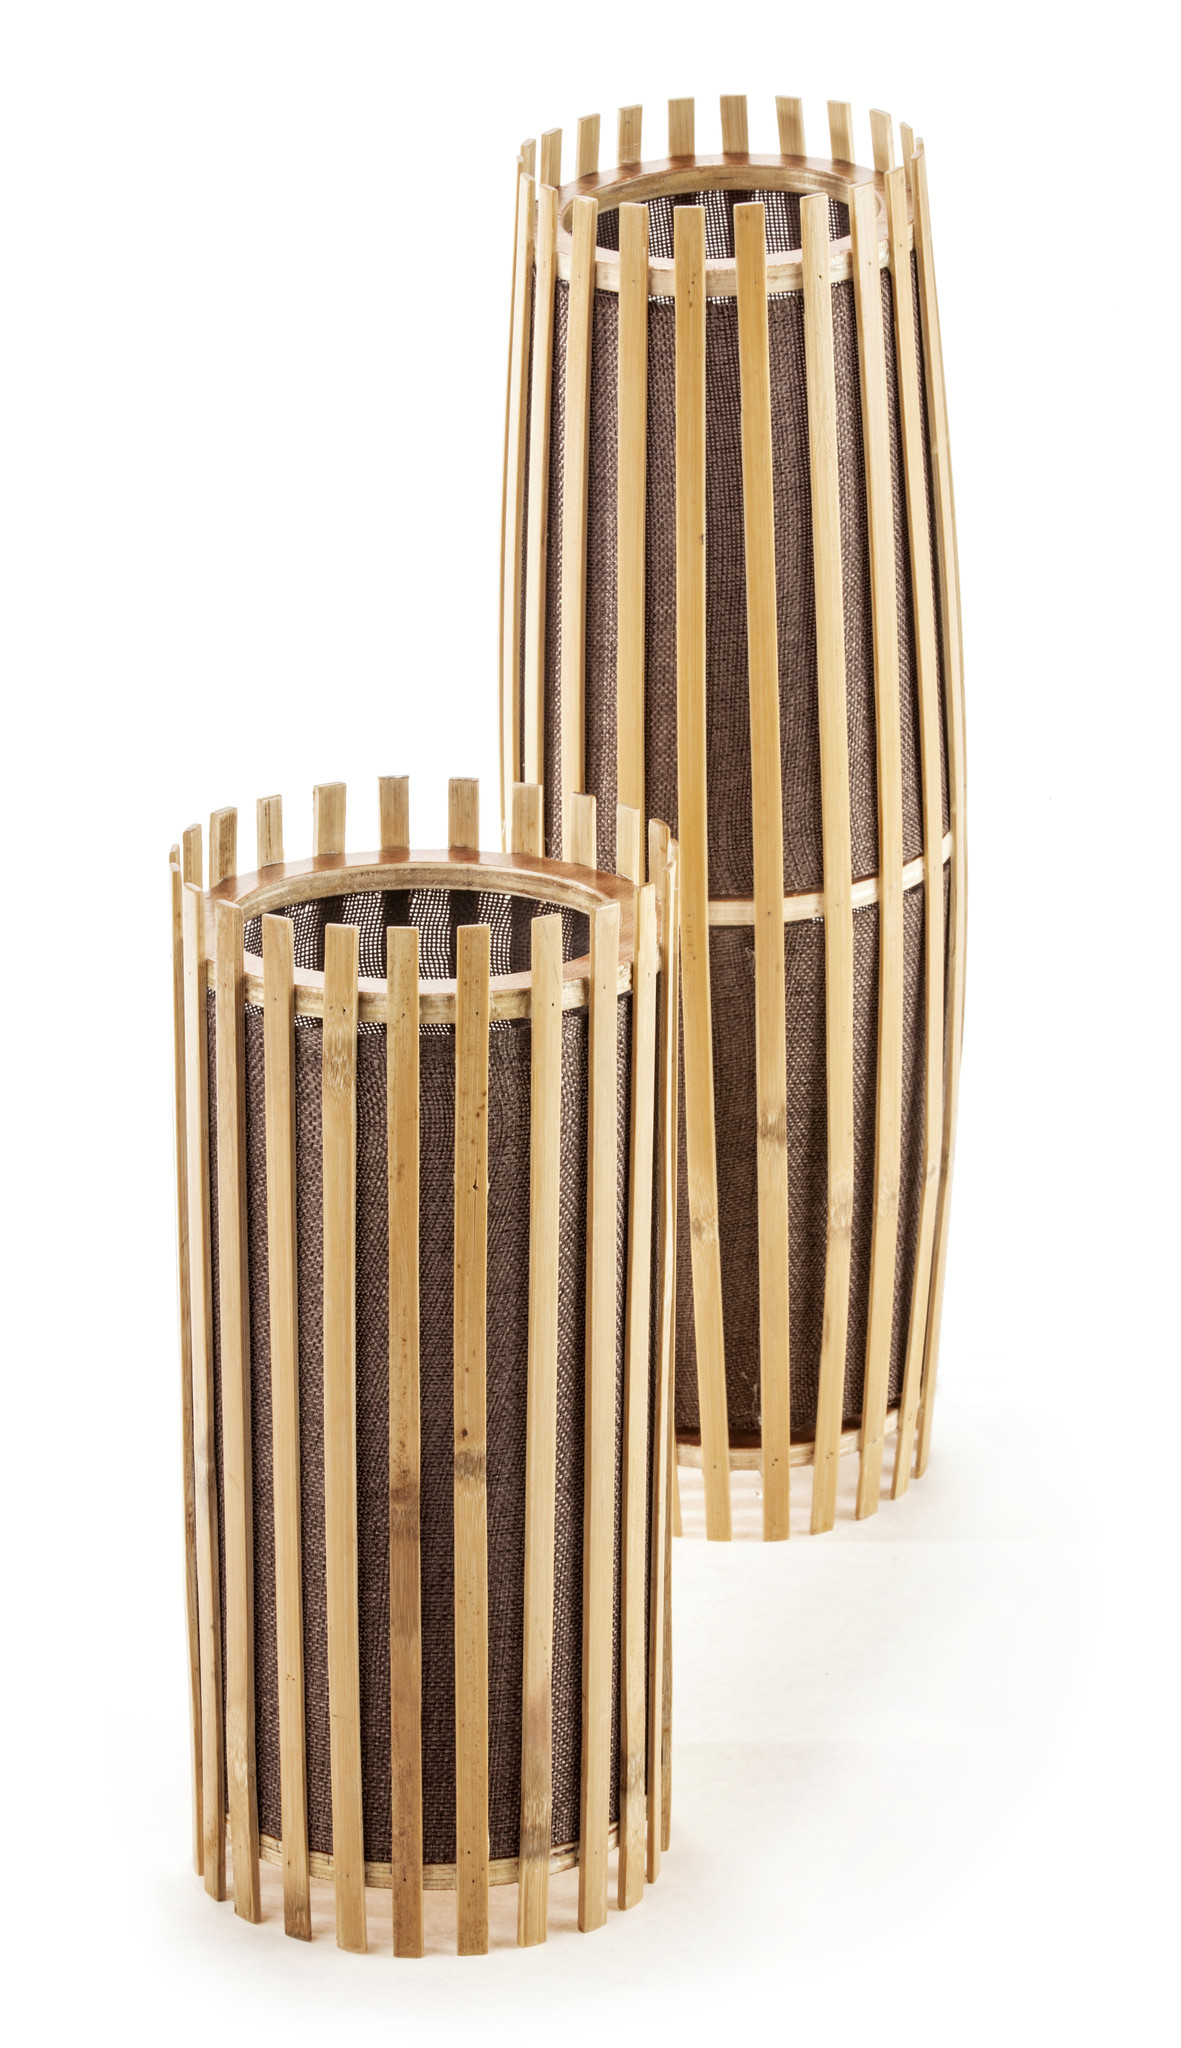 Bamboo table lamp - 10 reasons to buy - Warisan Lighting